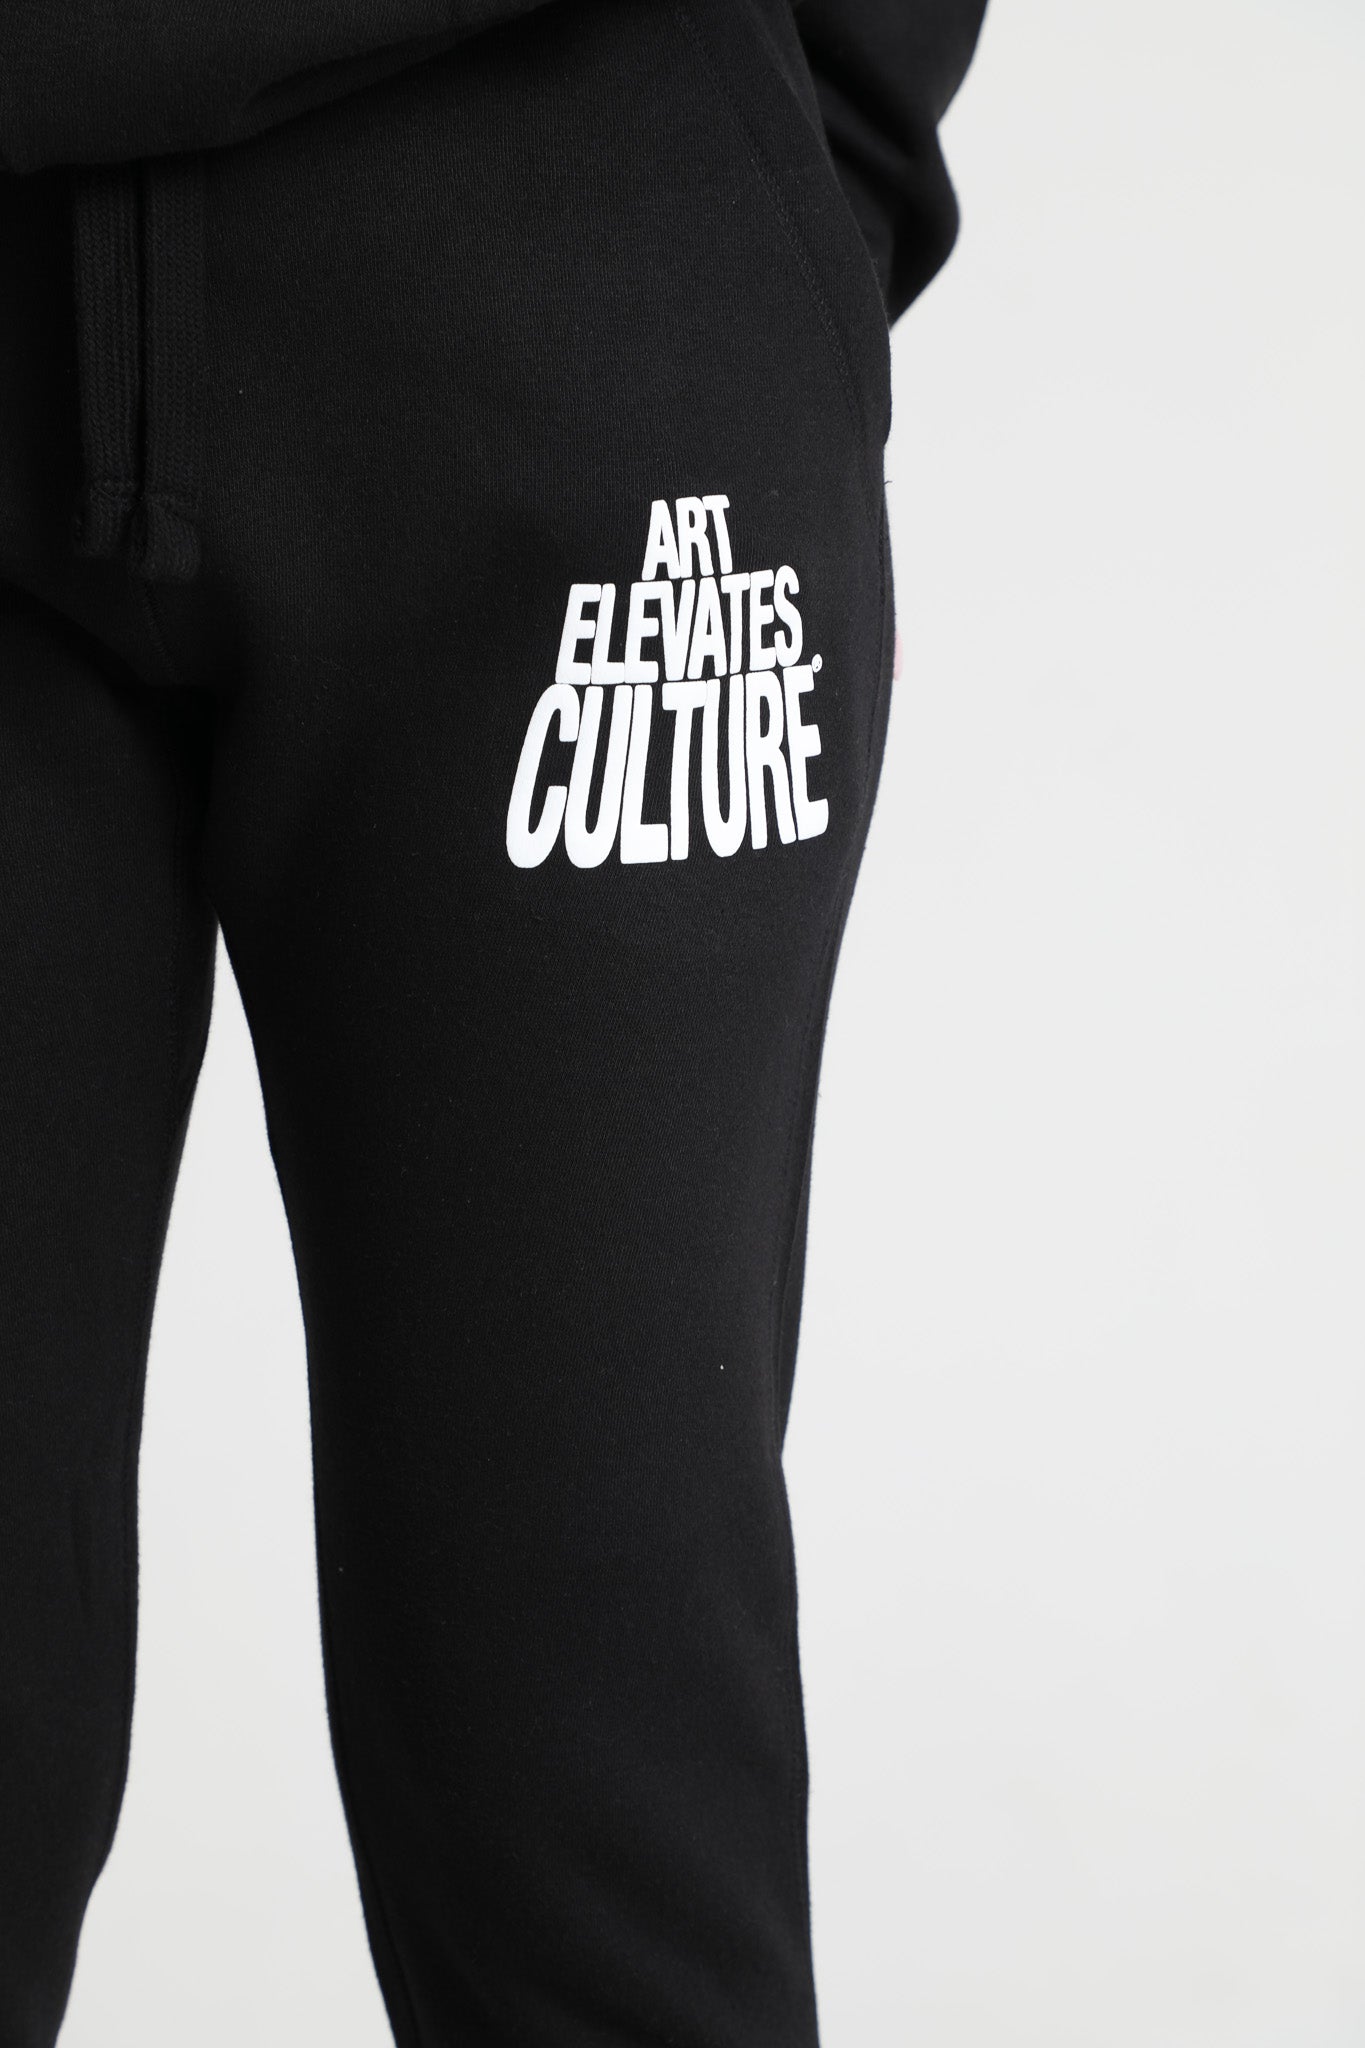 Art Elevates Culture - Sweatsuit (Black + White)